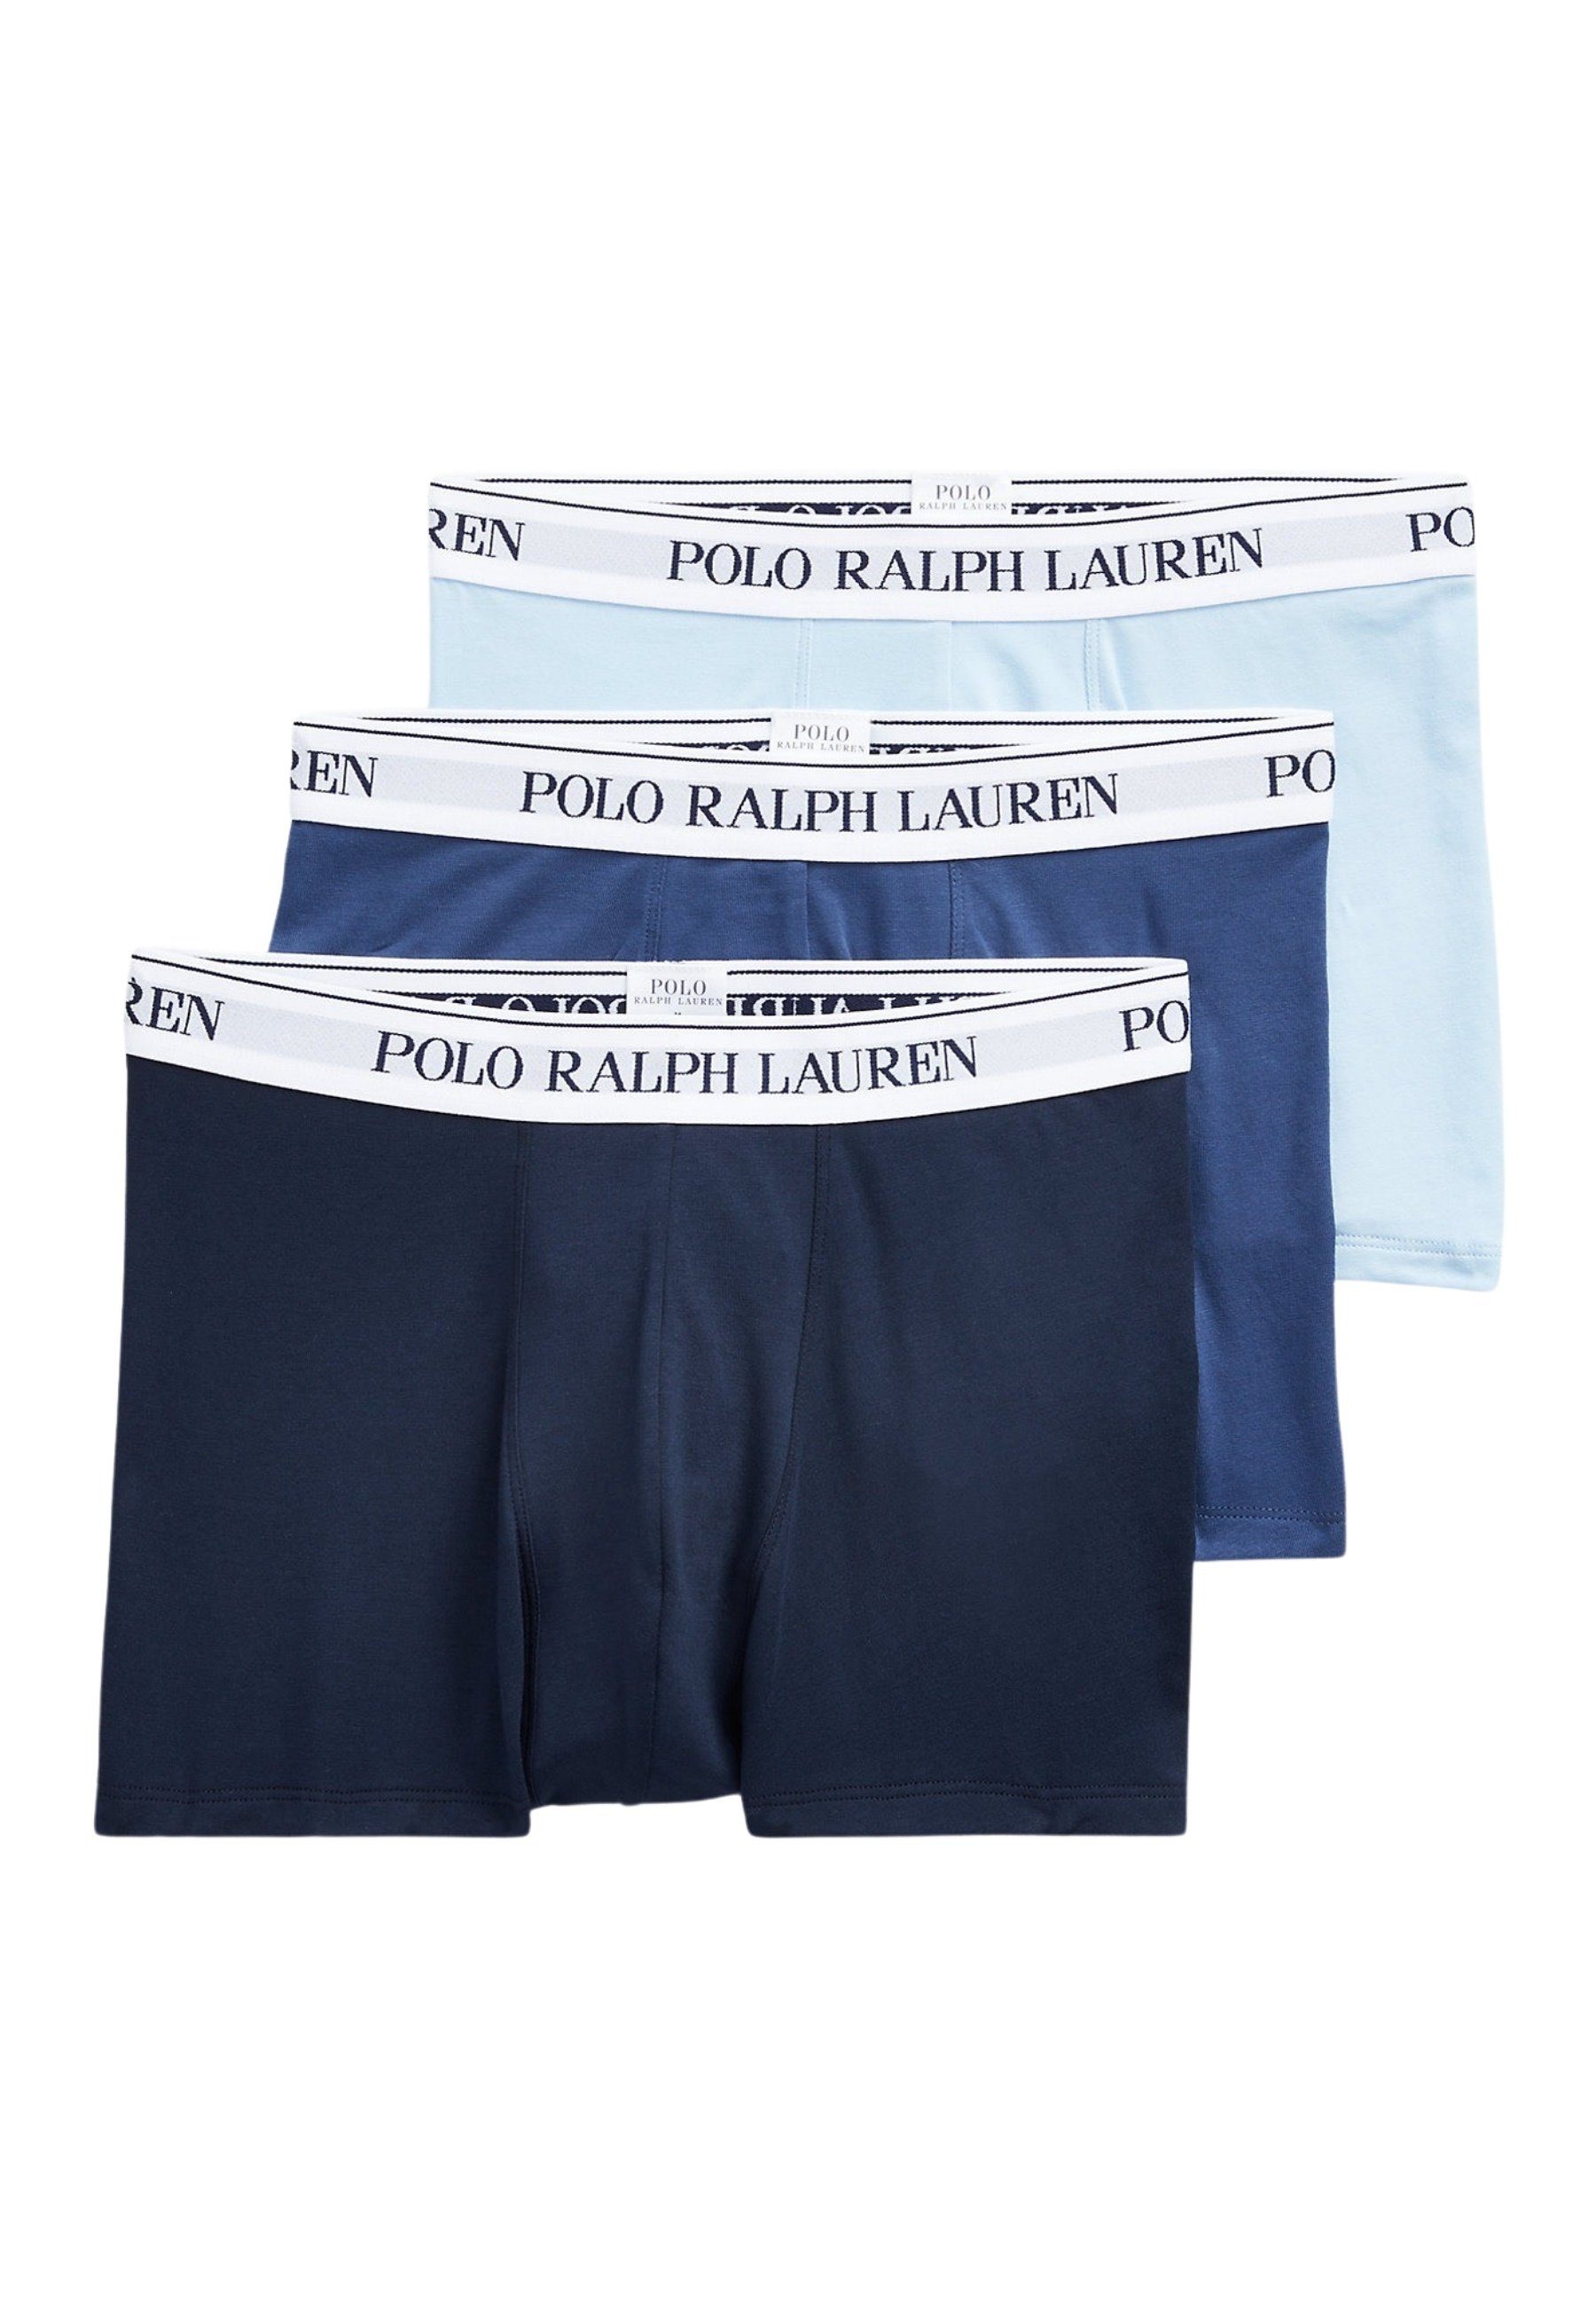 Polo Ralph Lauren Ralph Lauren 3er Boxershorts (3-St) Dunkelblau/Hellblau Trunks Unterhose Pack